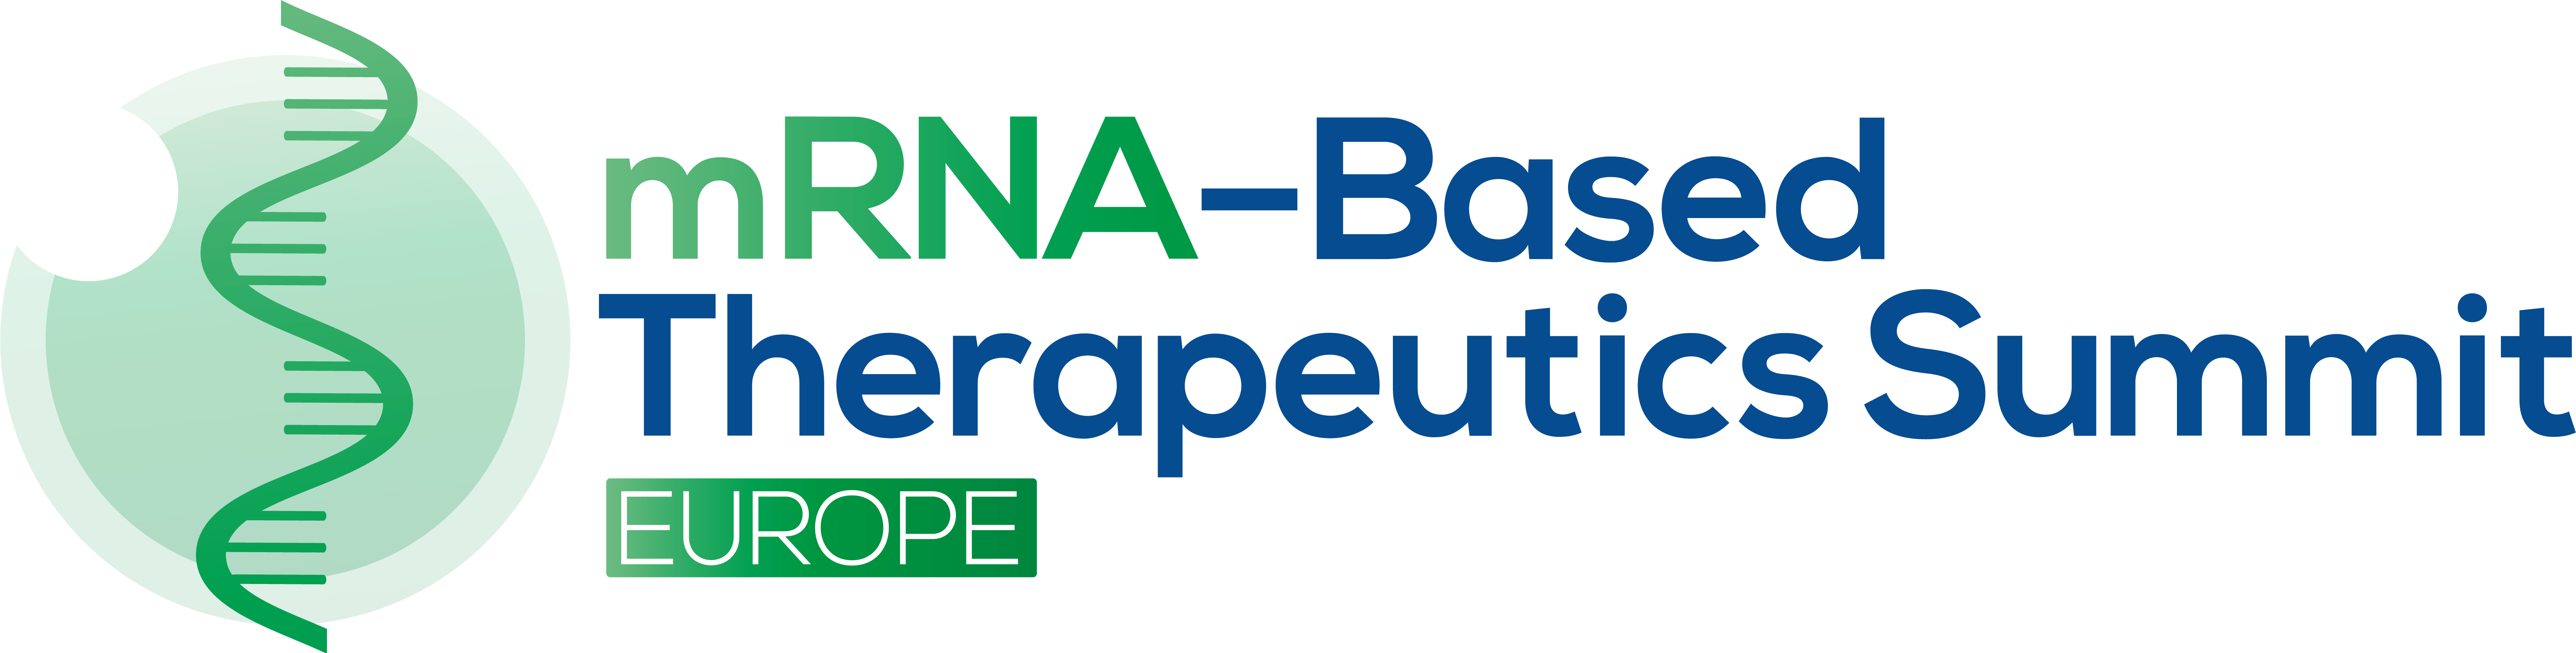 HW210823 mRNA Based Therapeutics Summit Europe logo FINAL